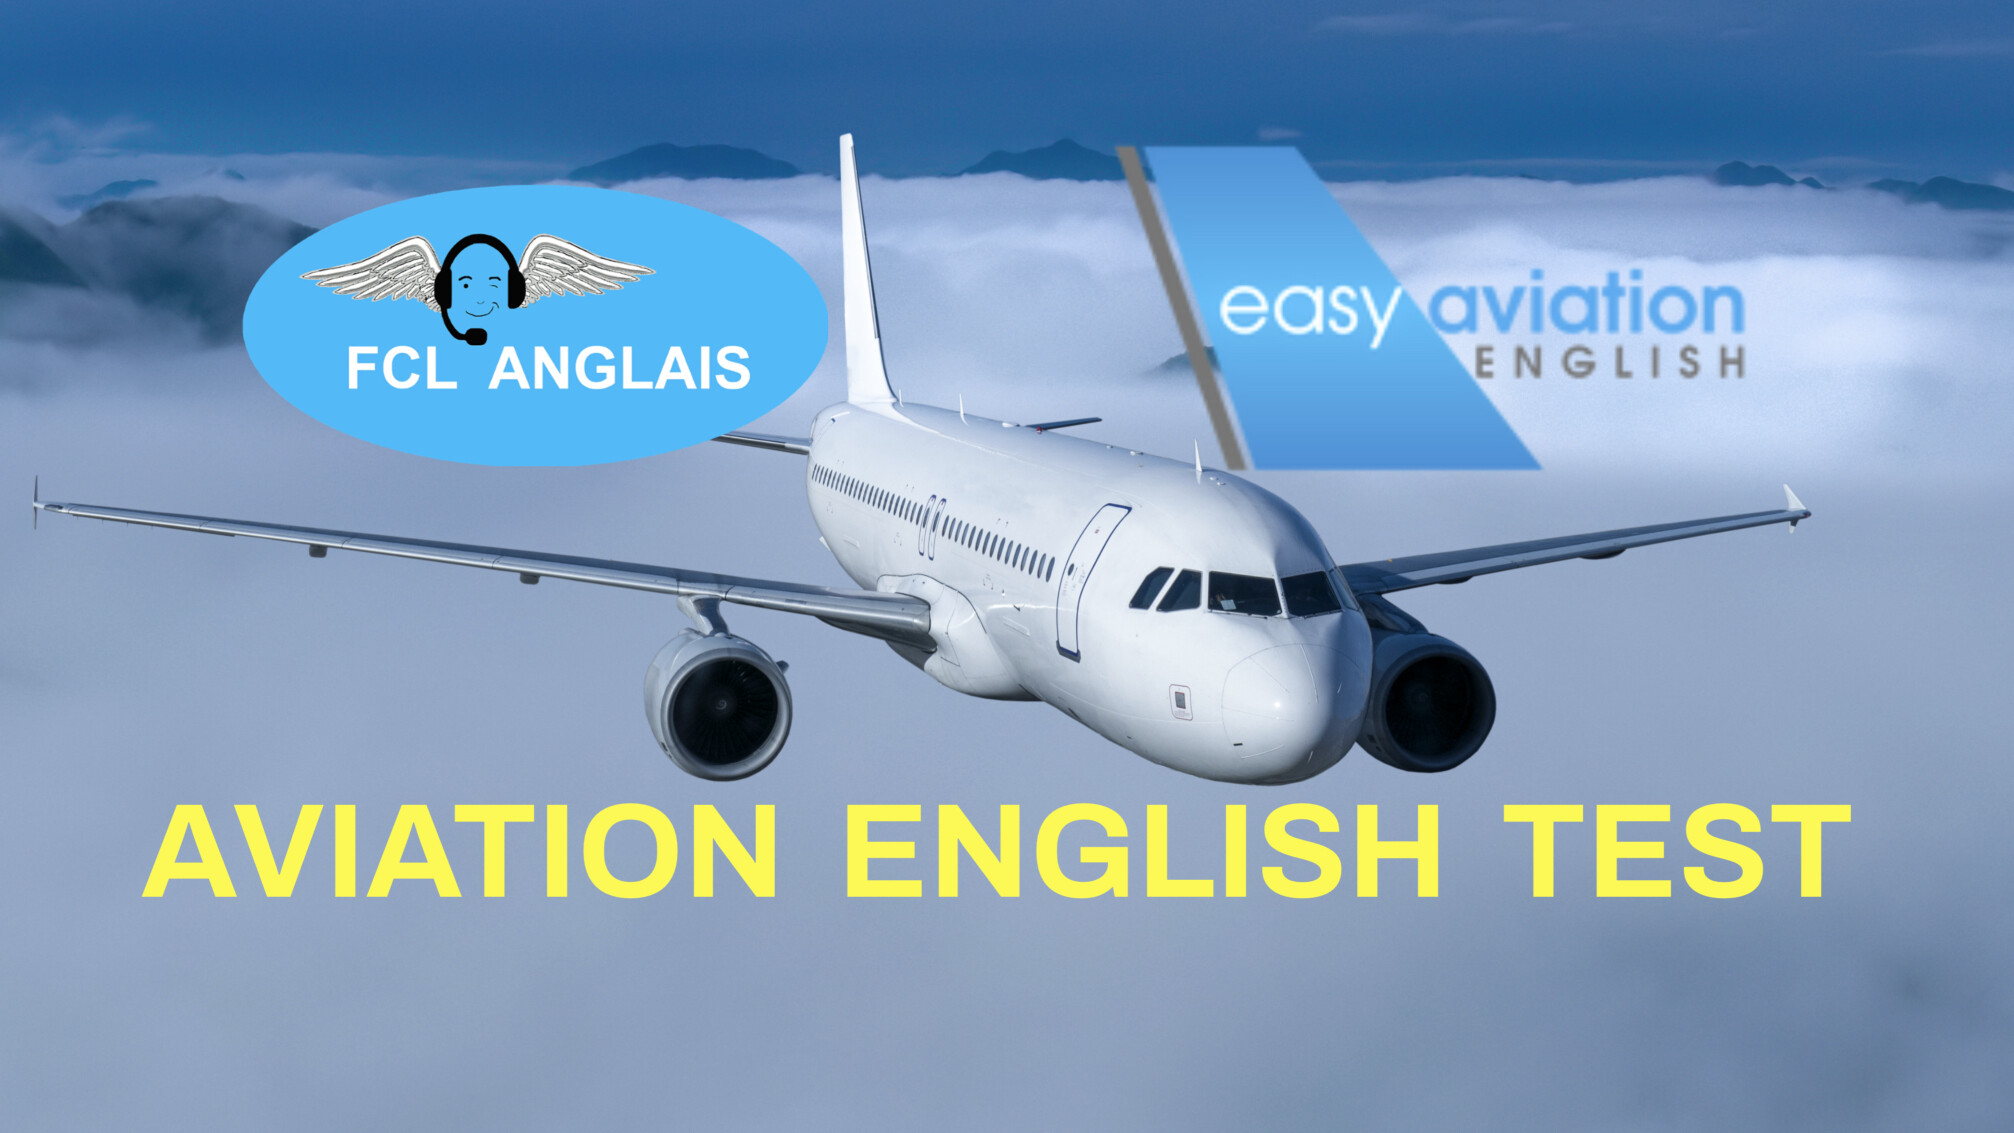 Aviation English test, Easy Aviation English, FCL ANGLAIS, aircraft, avion